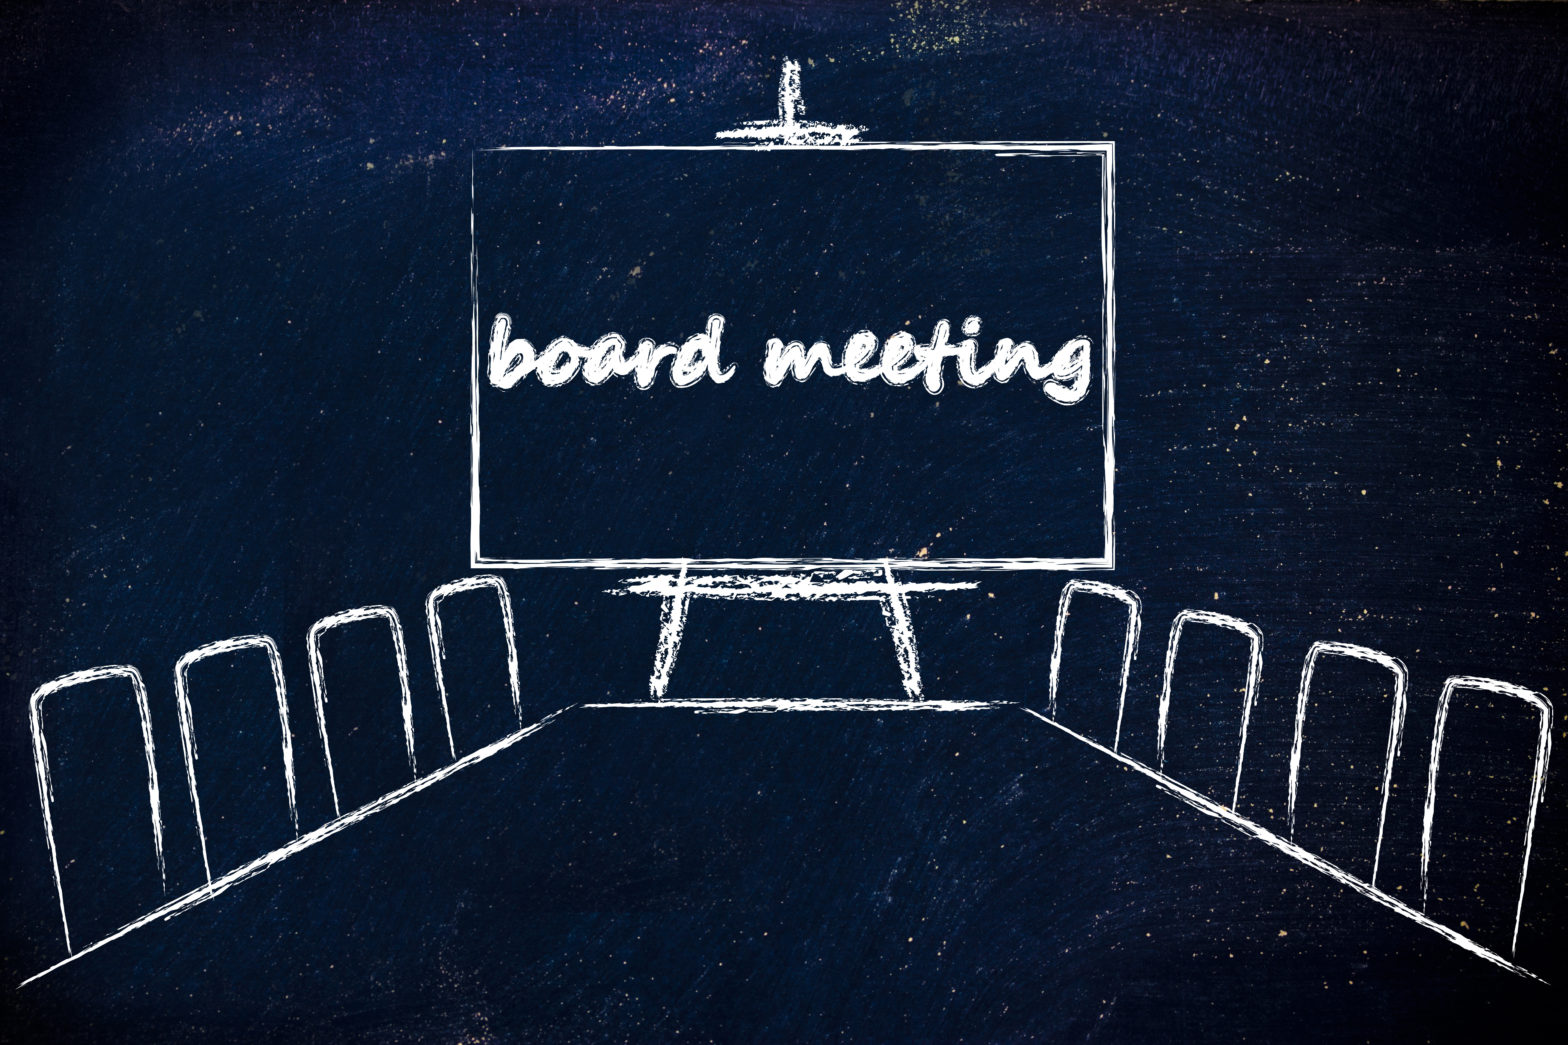 Special Board of Trustees Meeting